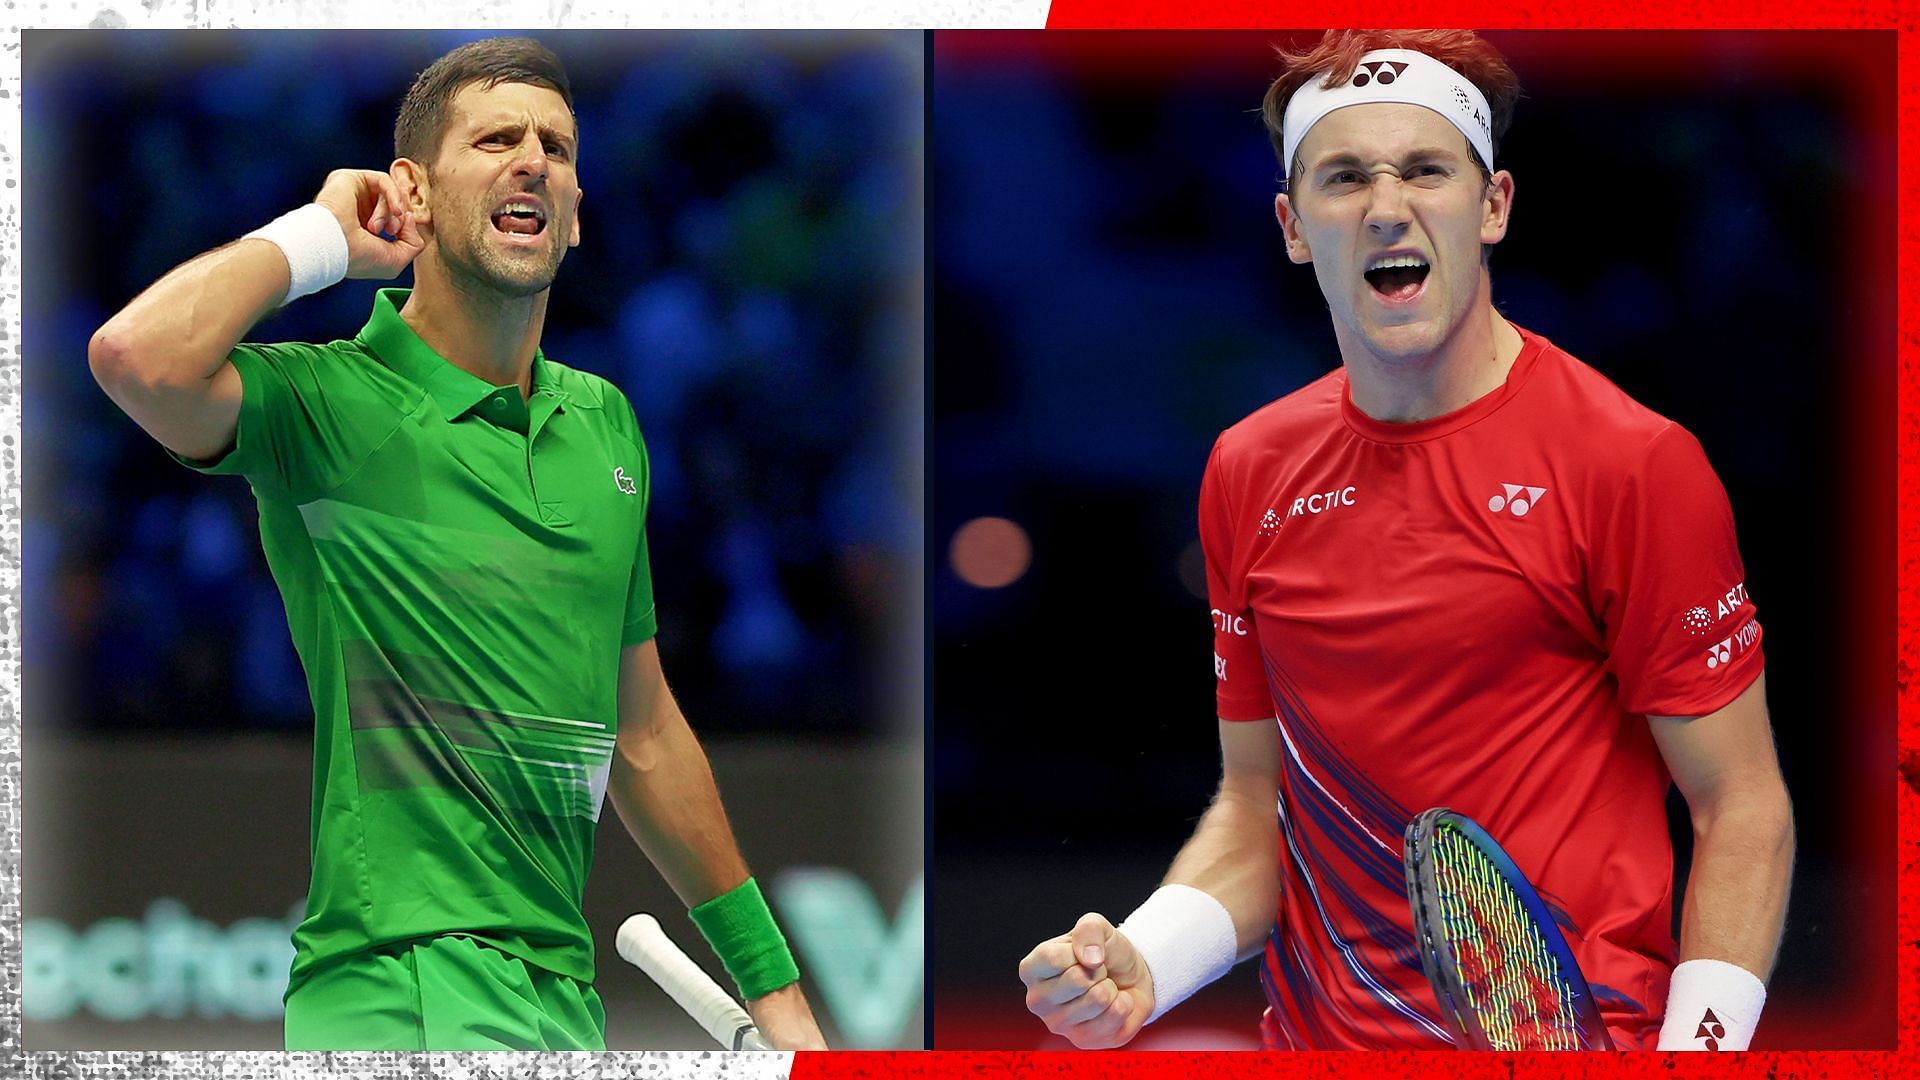 Novak Djokovic (L) and Casper Ruud